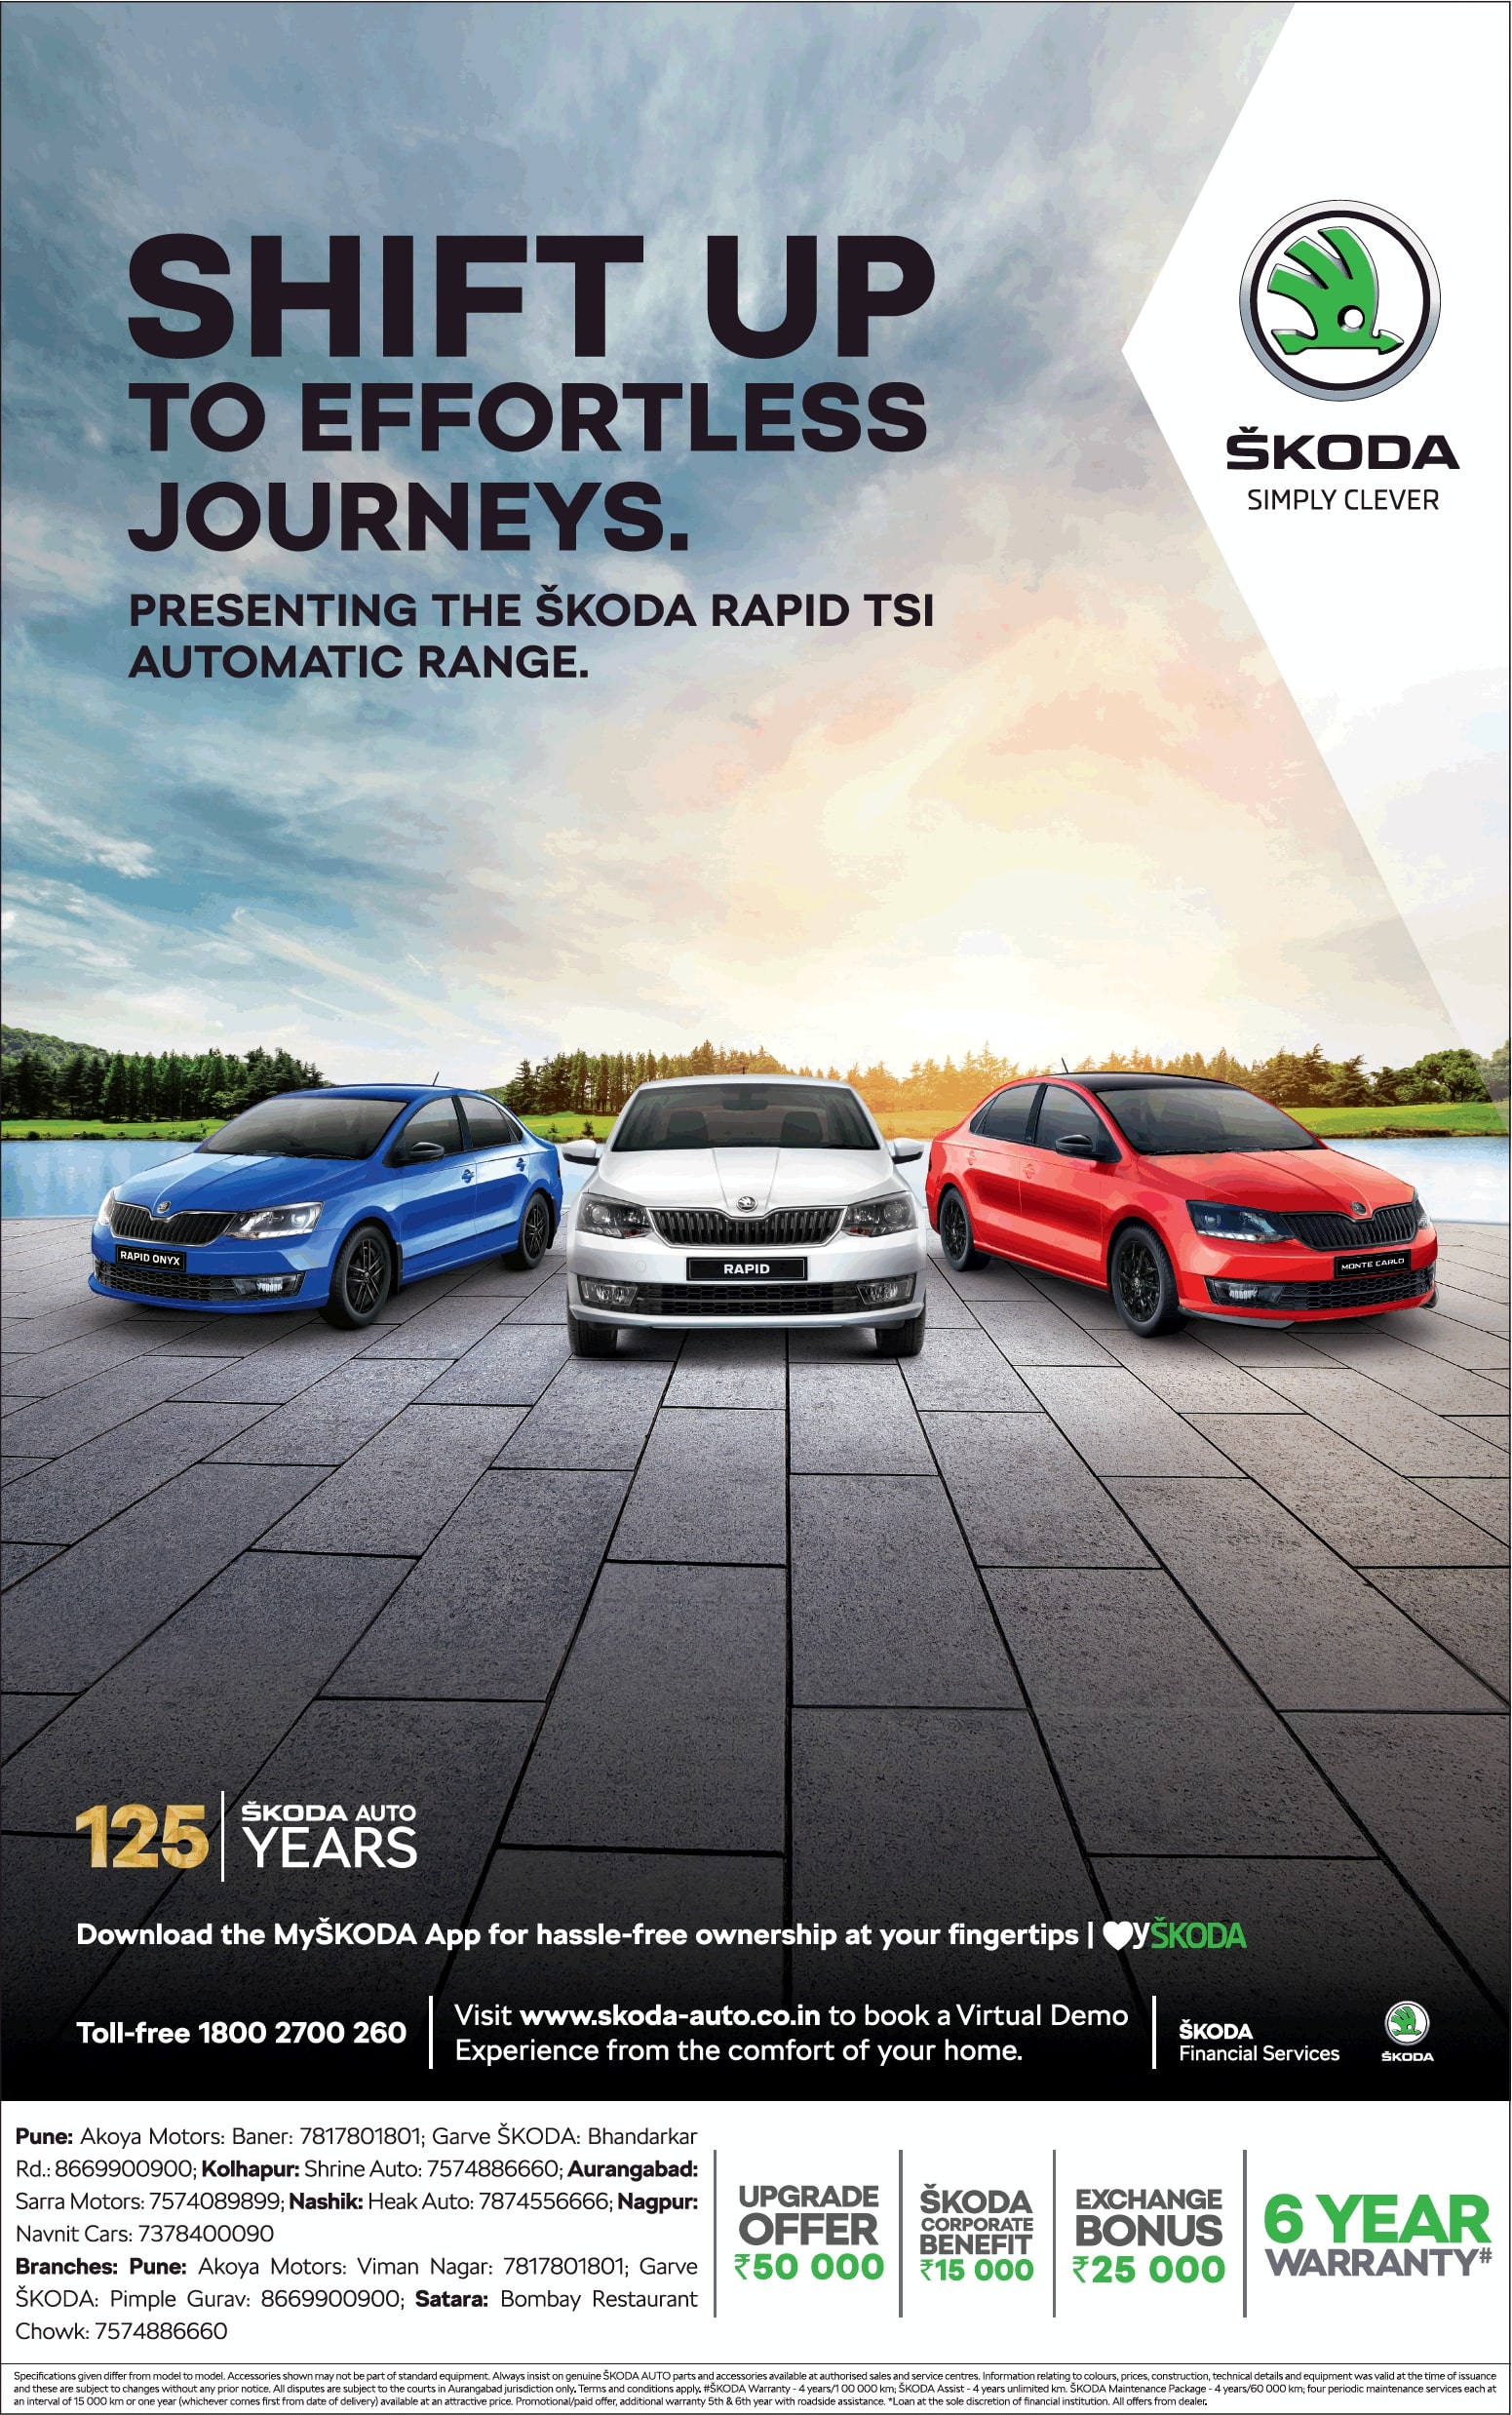 skoda-shift-up-to-effortless-journeys-presenting-the-skoda-rapid-tsi-automatic-range-cars-ad-toi-pune-9-11-2020